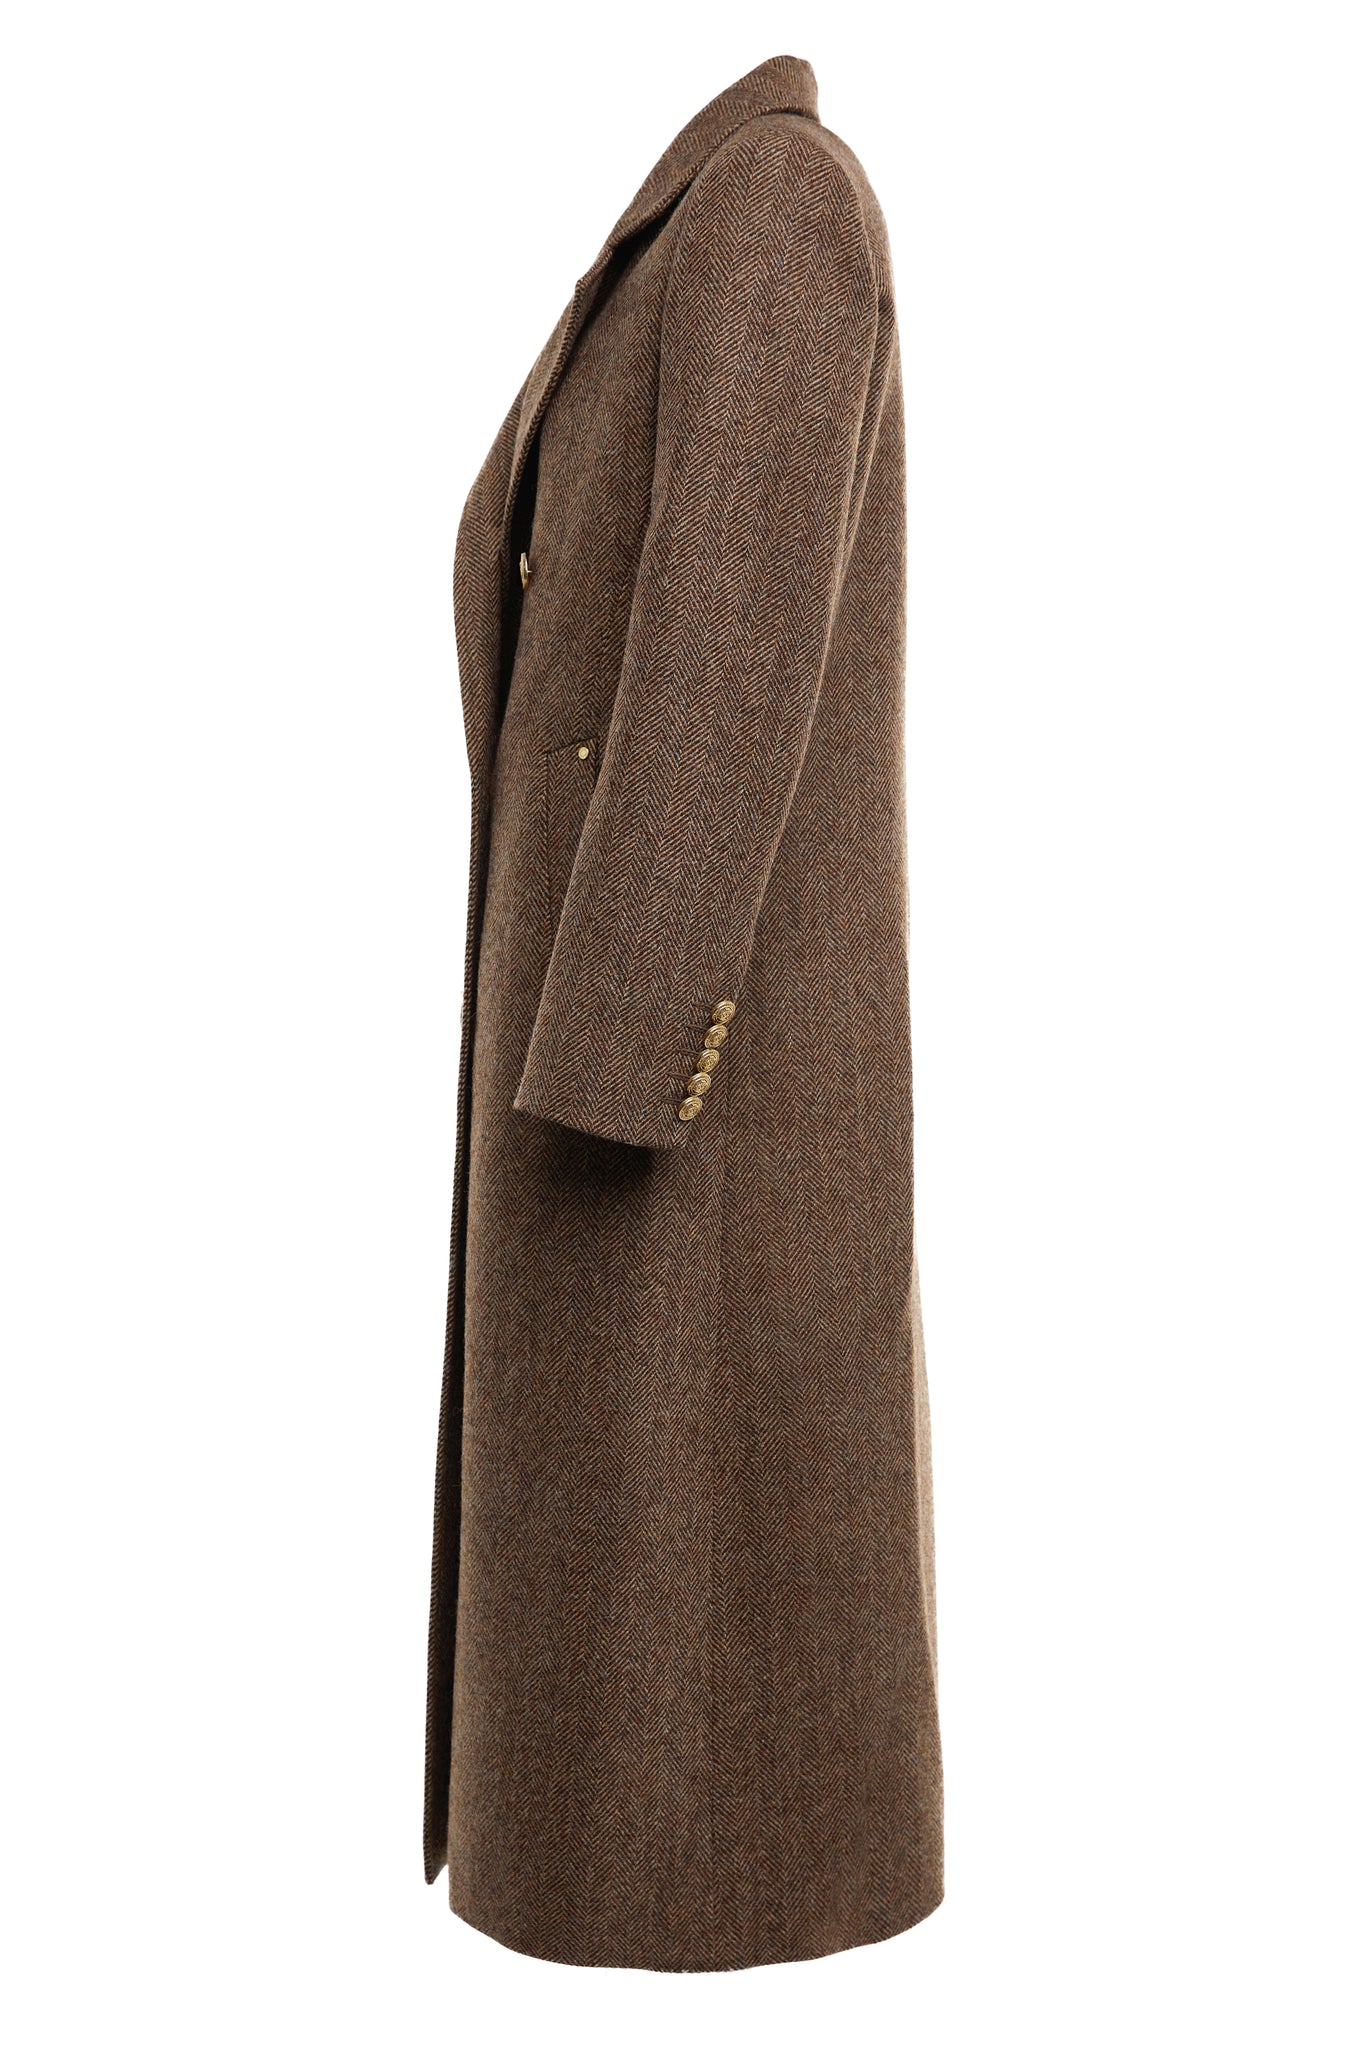 Double Breasted Coat (Large Scale Brown Herringbone)